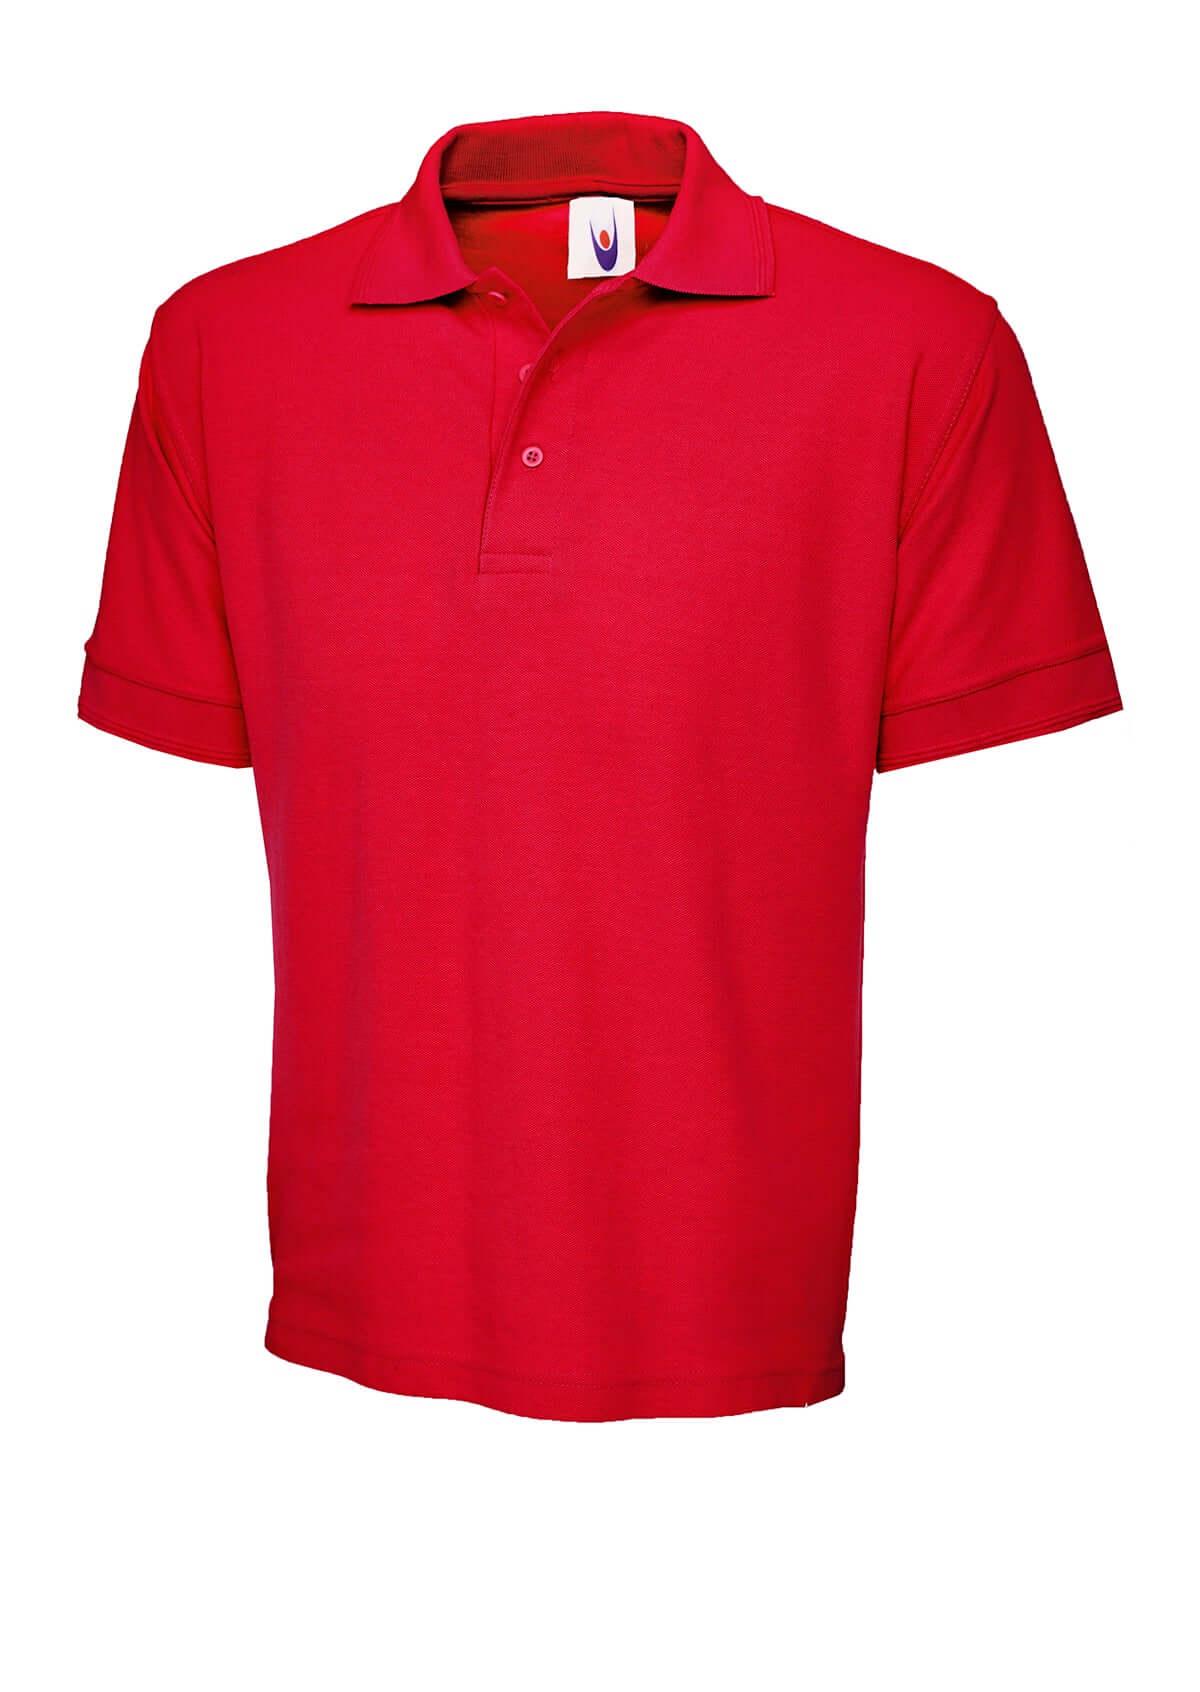 Pegasus Uniform Elite Unisex Cotton Polo Shirt - Red